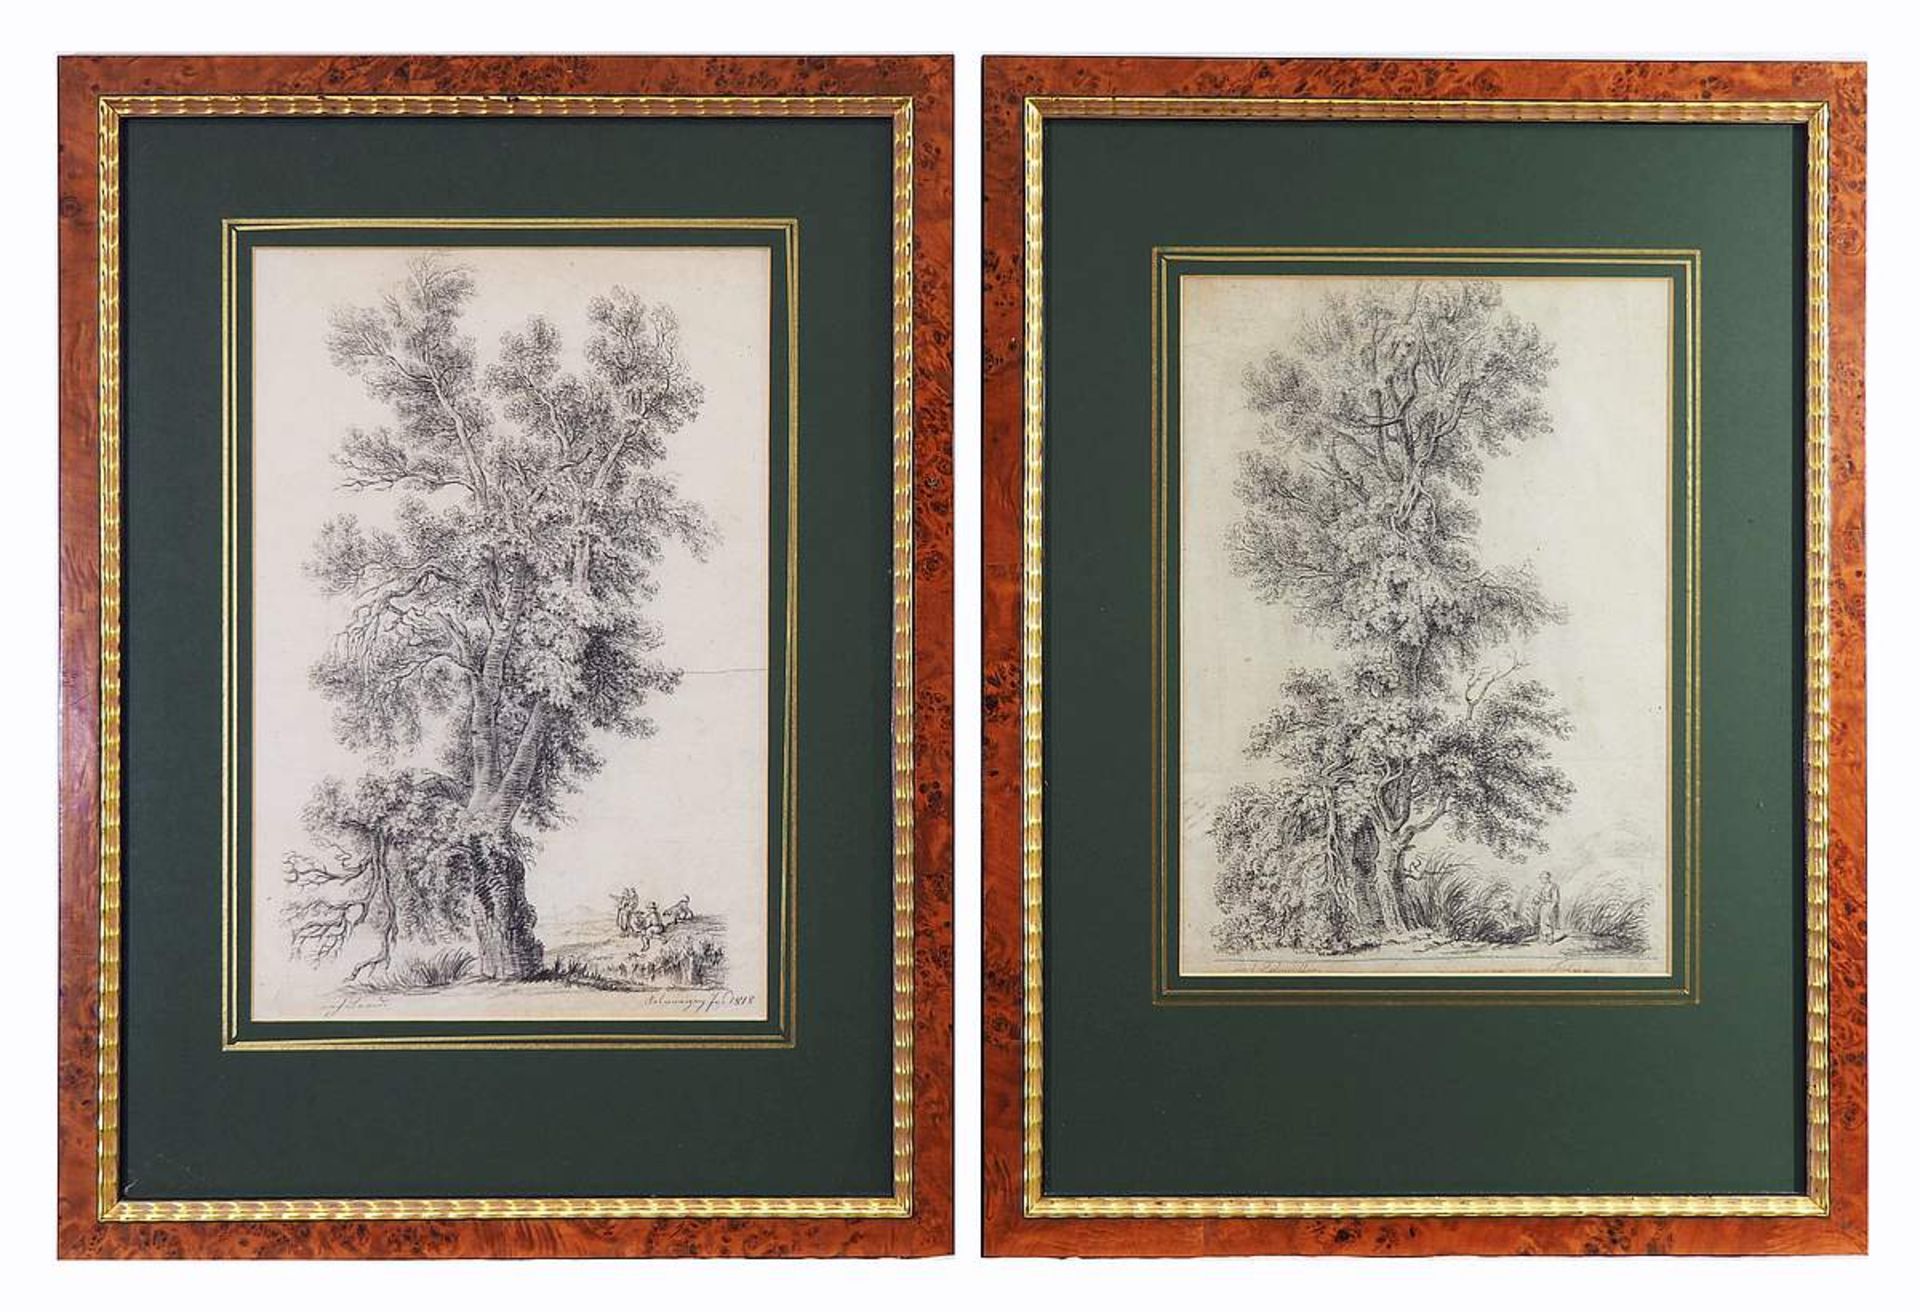 Paar Biedermeier-Handzeichnungen, datiert 1818.Paar Biedermeier-Handzeichnungen, datiert 1818. - Image 2 of 6